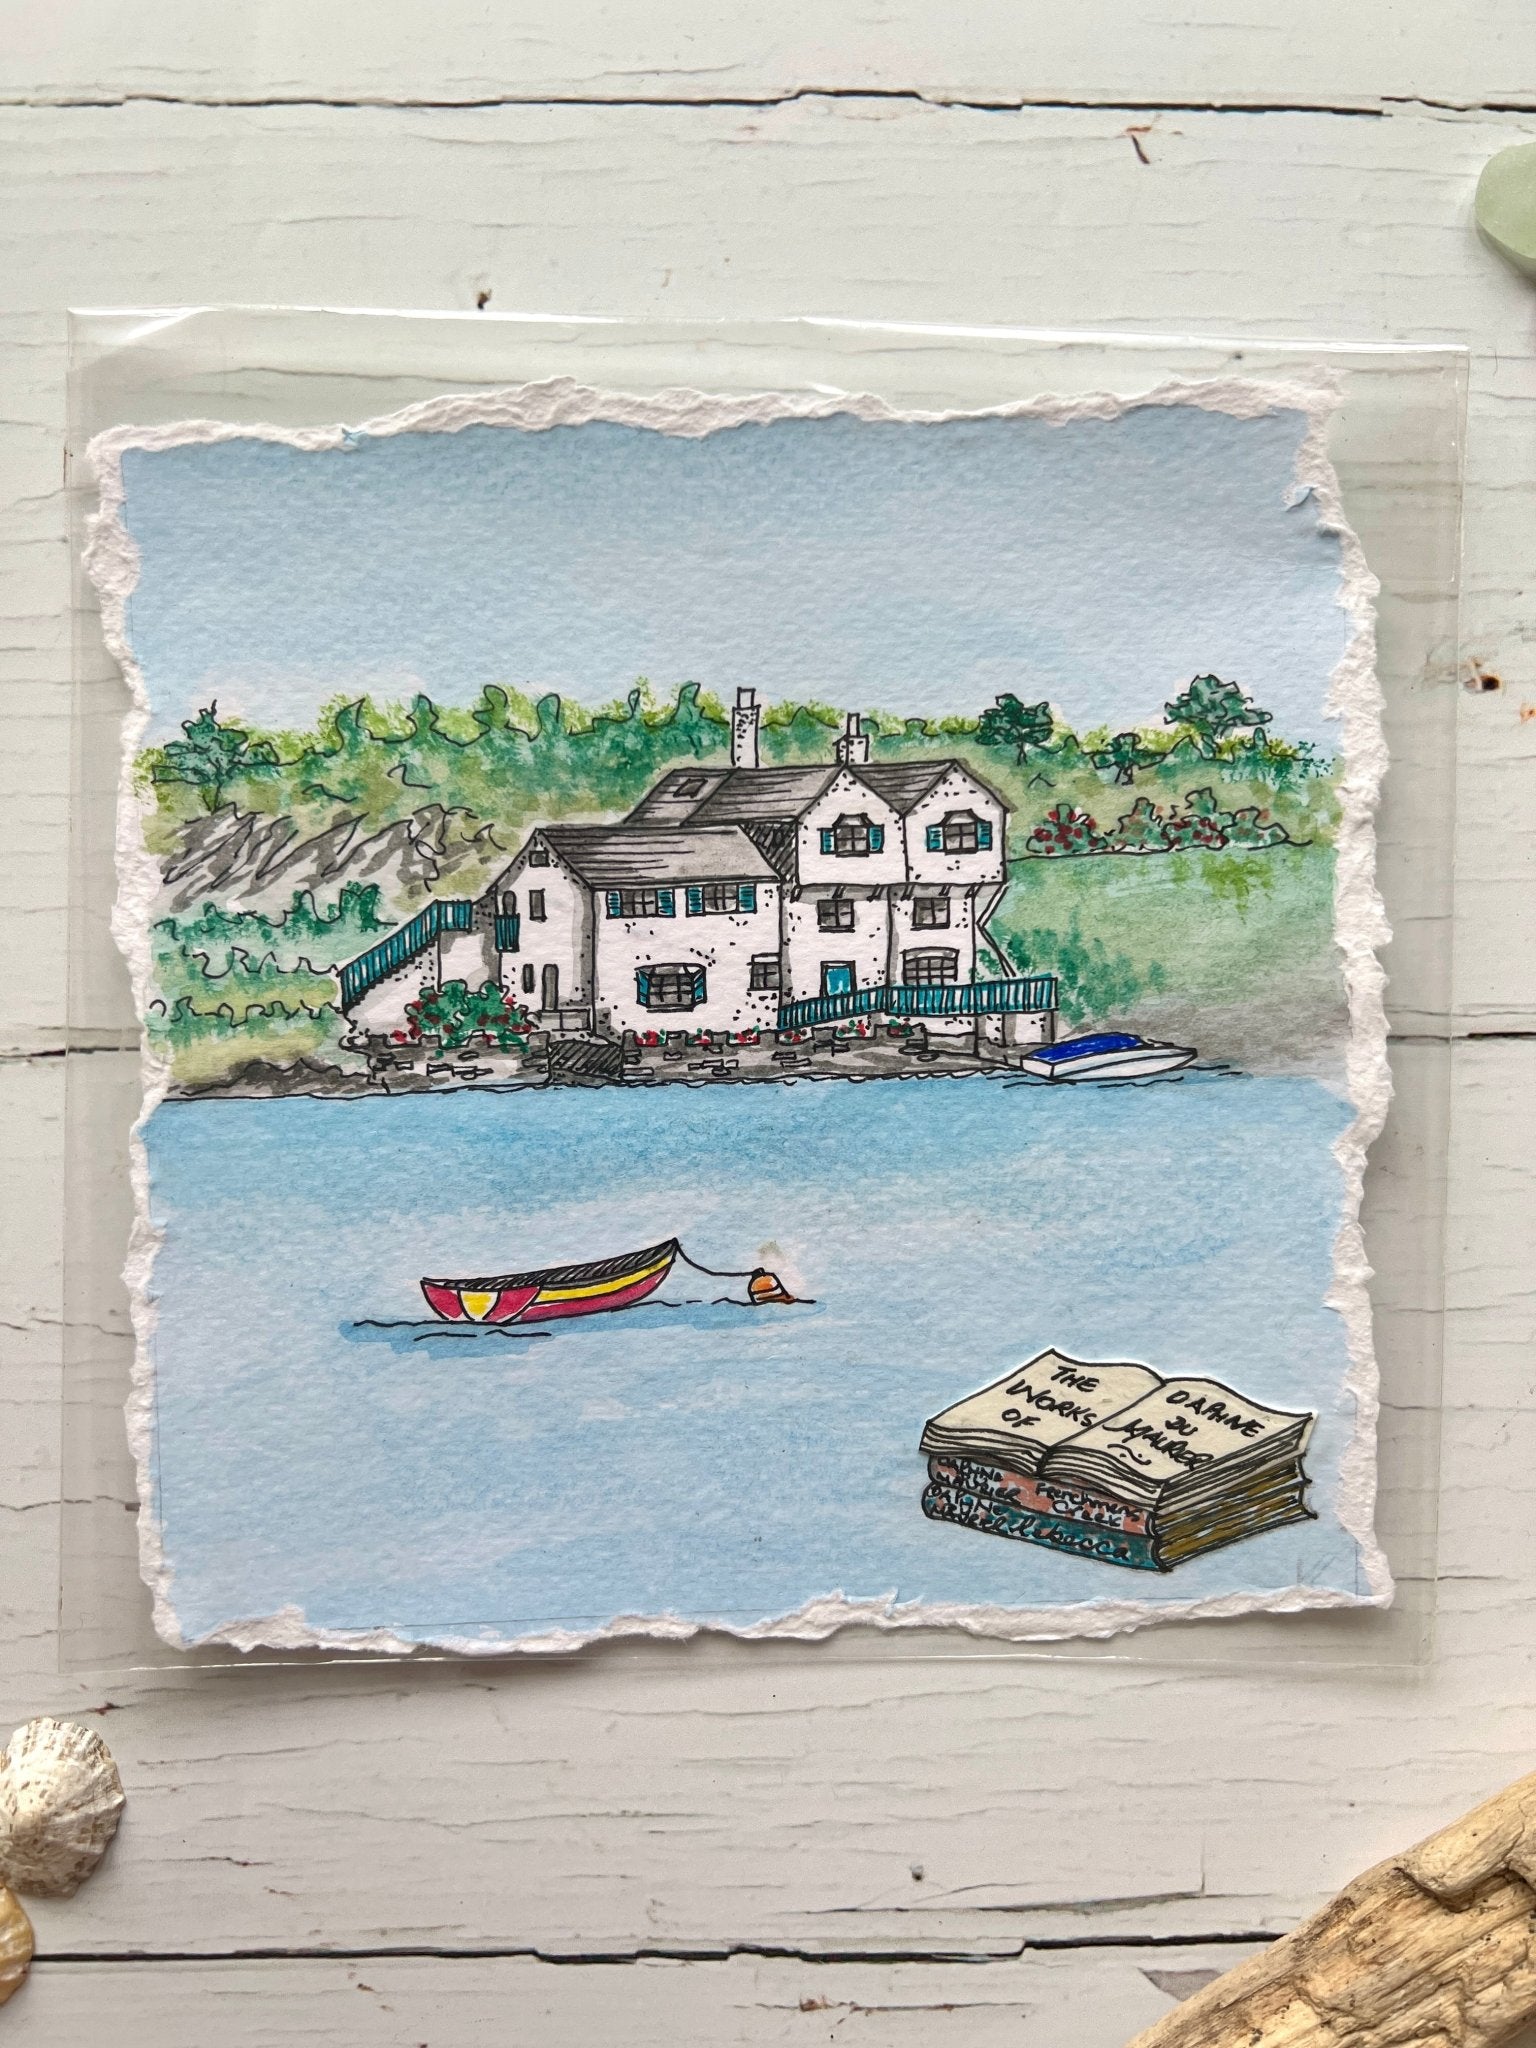 Original Watercolour Art of iconic Fowey scenes - Readymoney Beach Shop